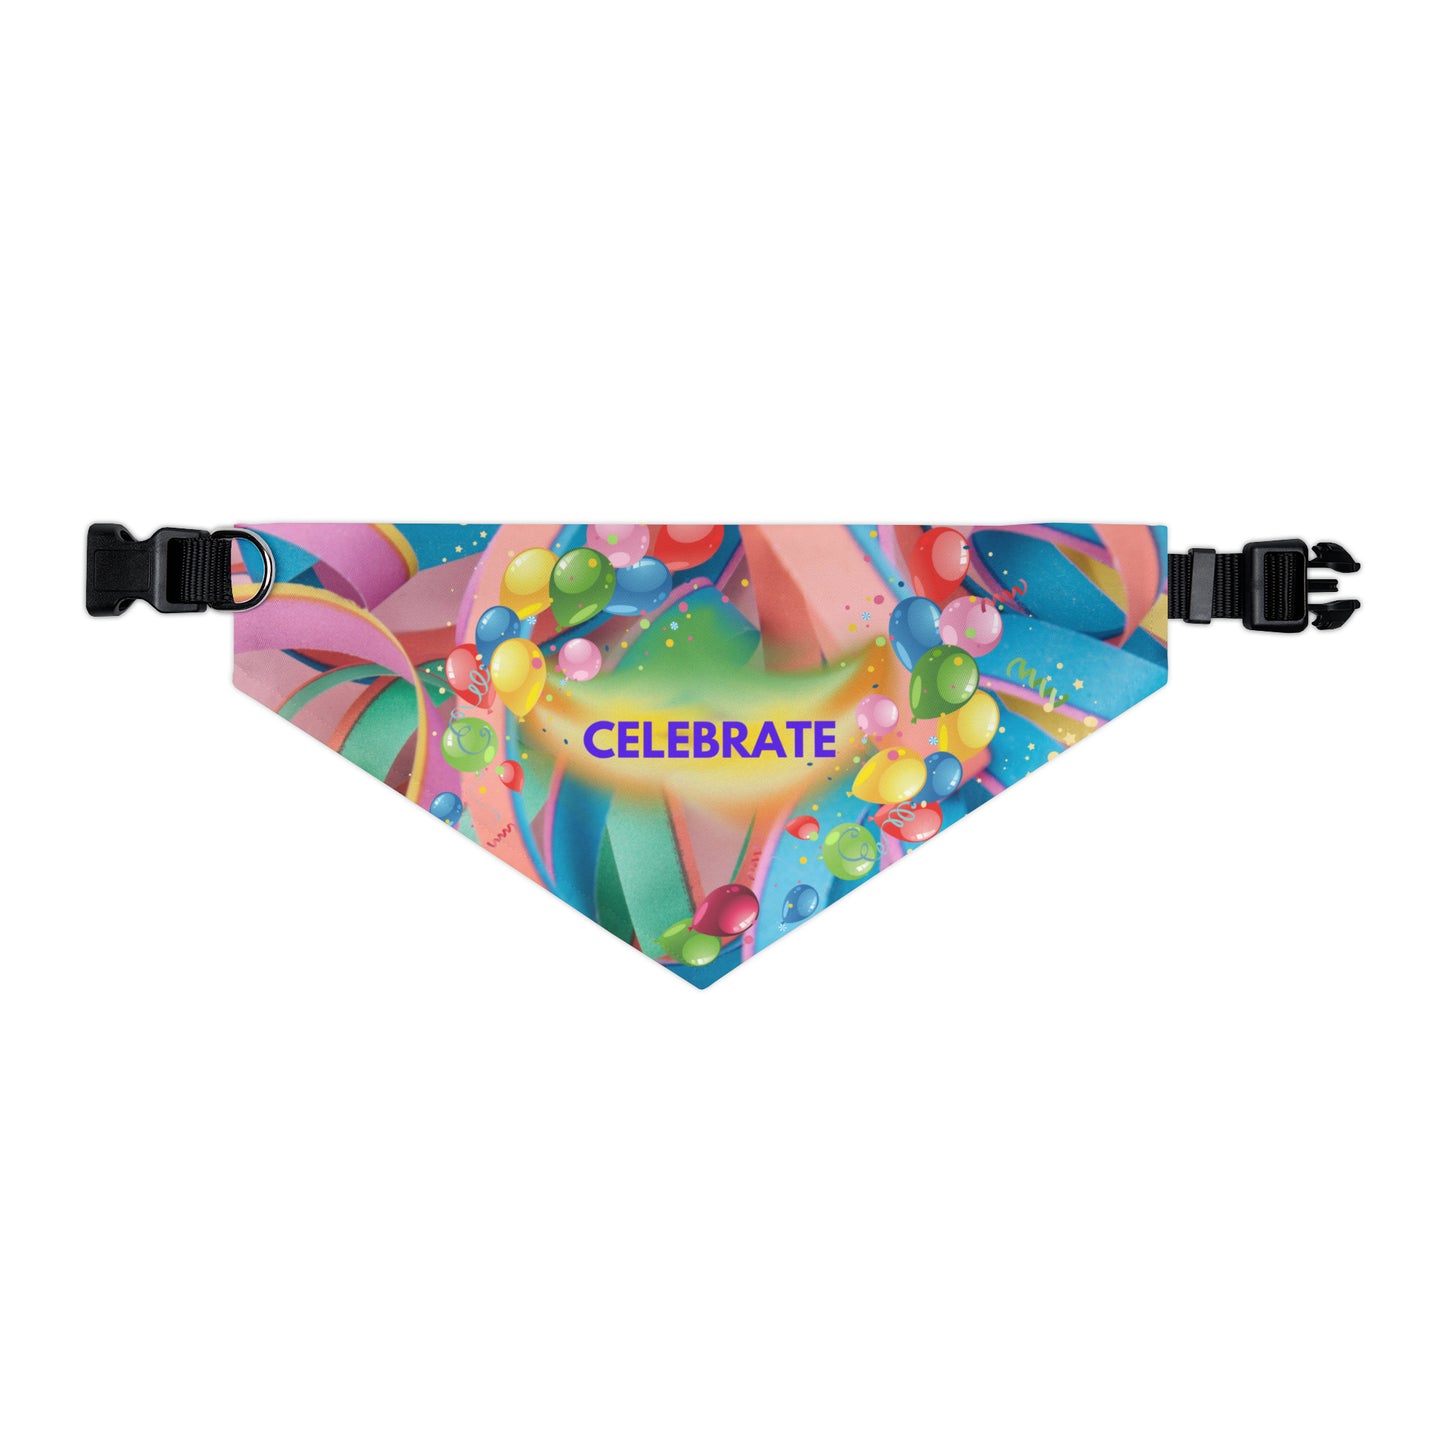 FurryFashionista Bandana COLLAR - "Celebrate" Motif - Special Occasion/Party Design